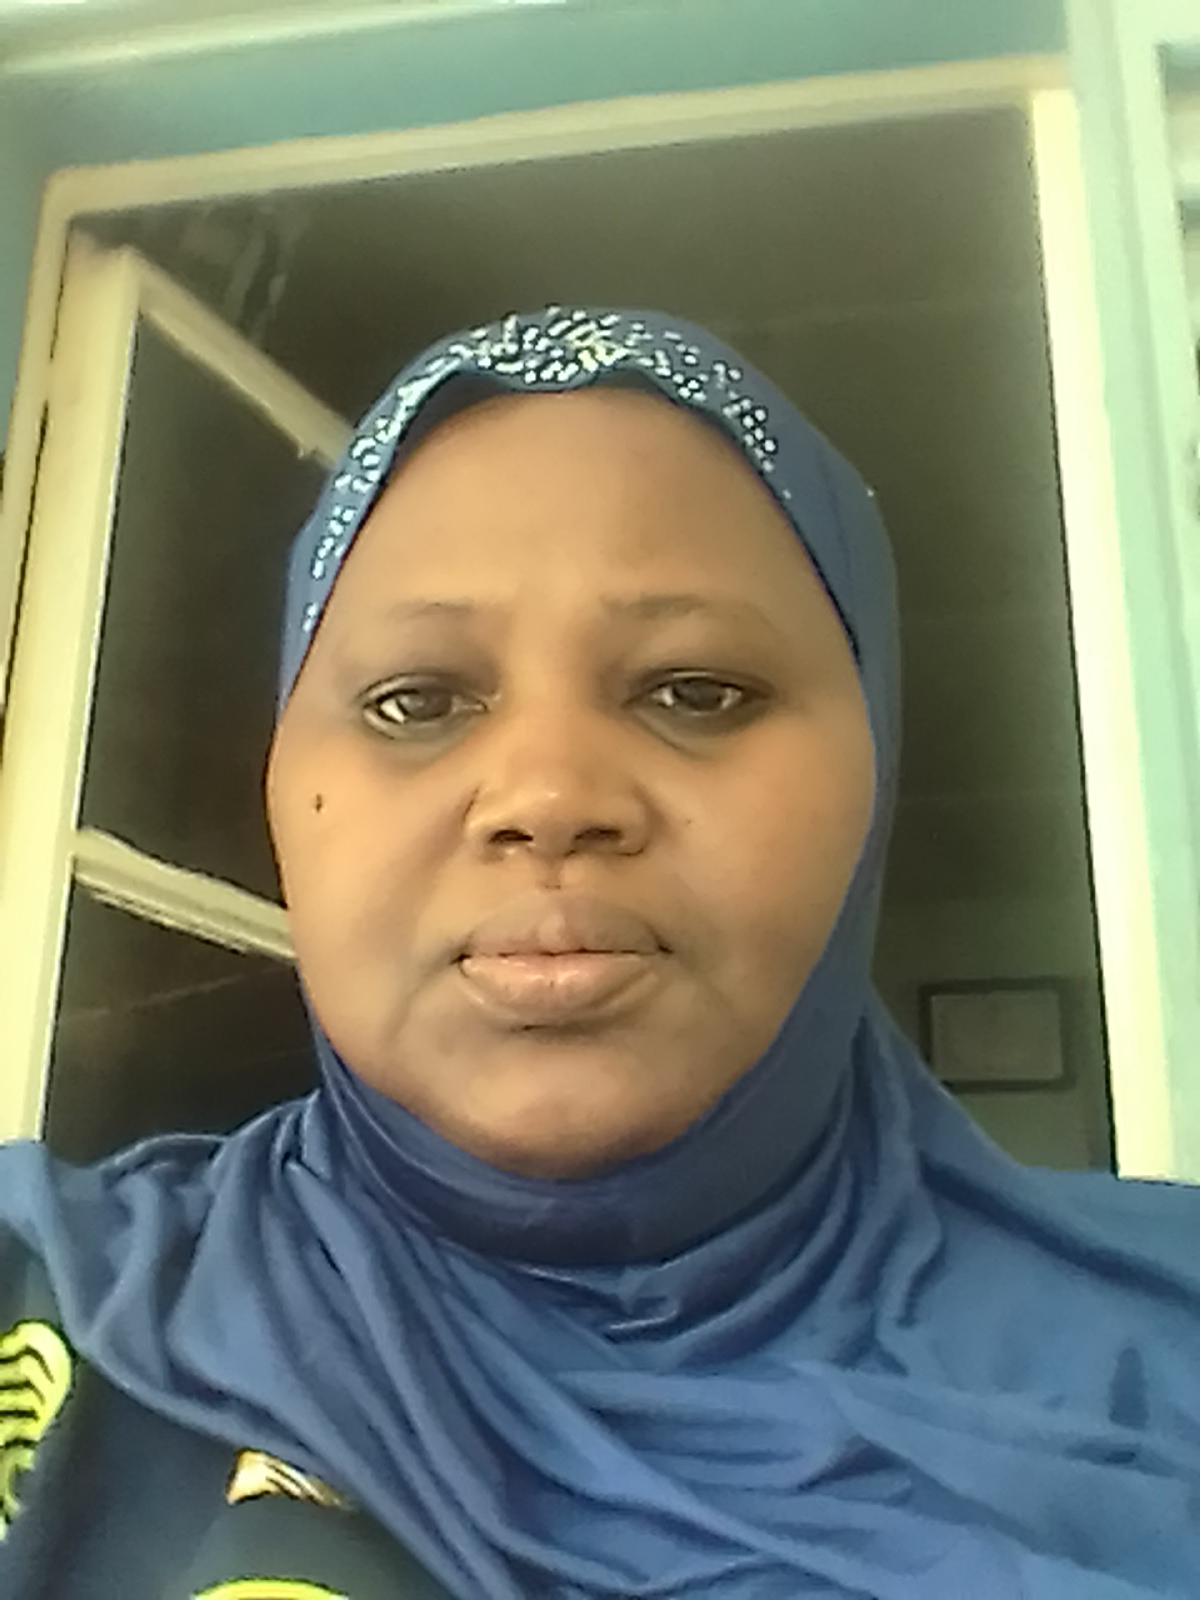 Erdenechimeg Abdoul Rachid Fatima Moustaphatahi